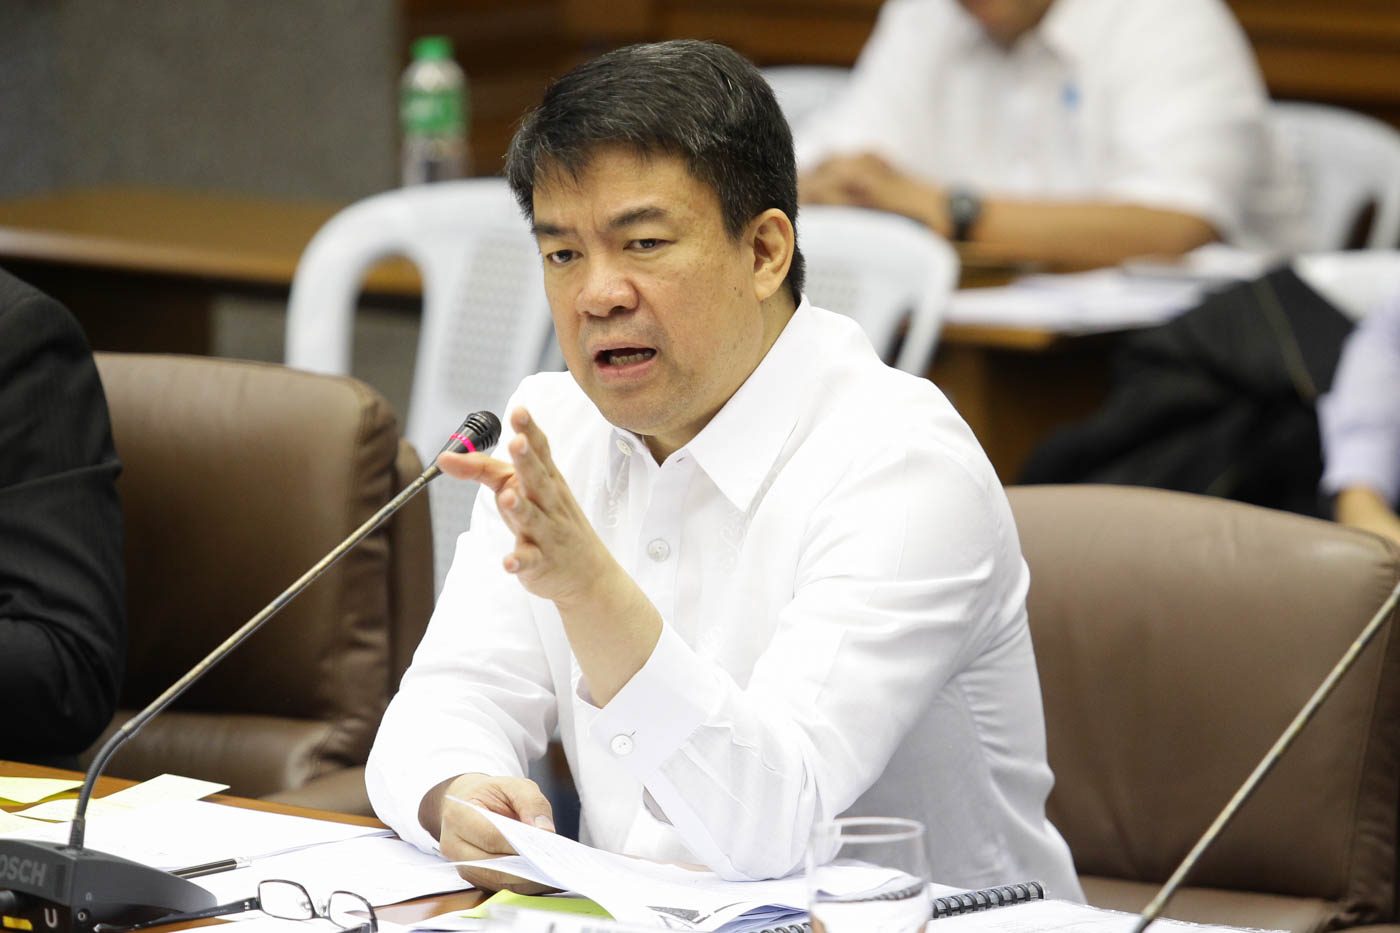 Senators: Why didn’t Aquino fire Binay?